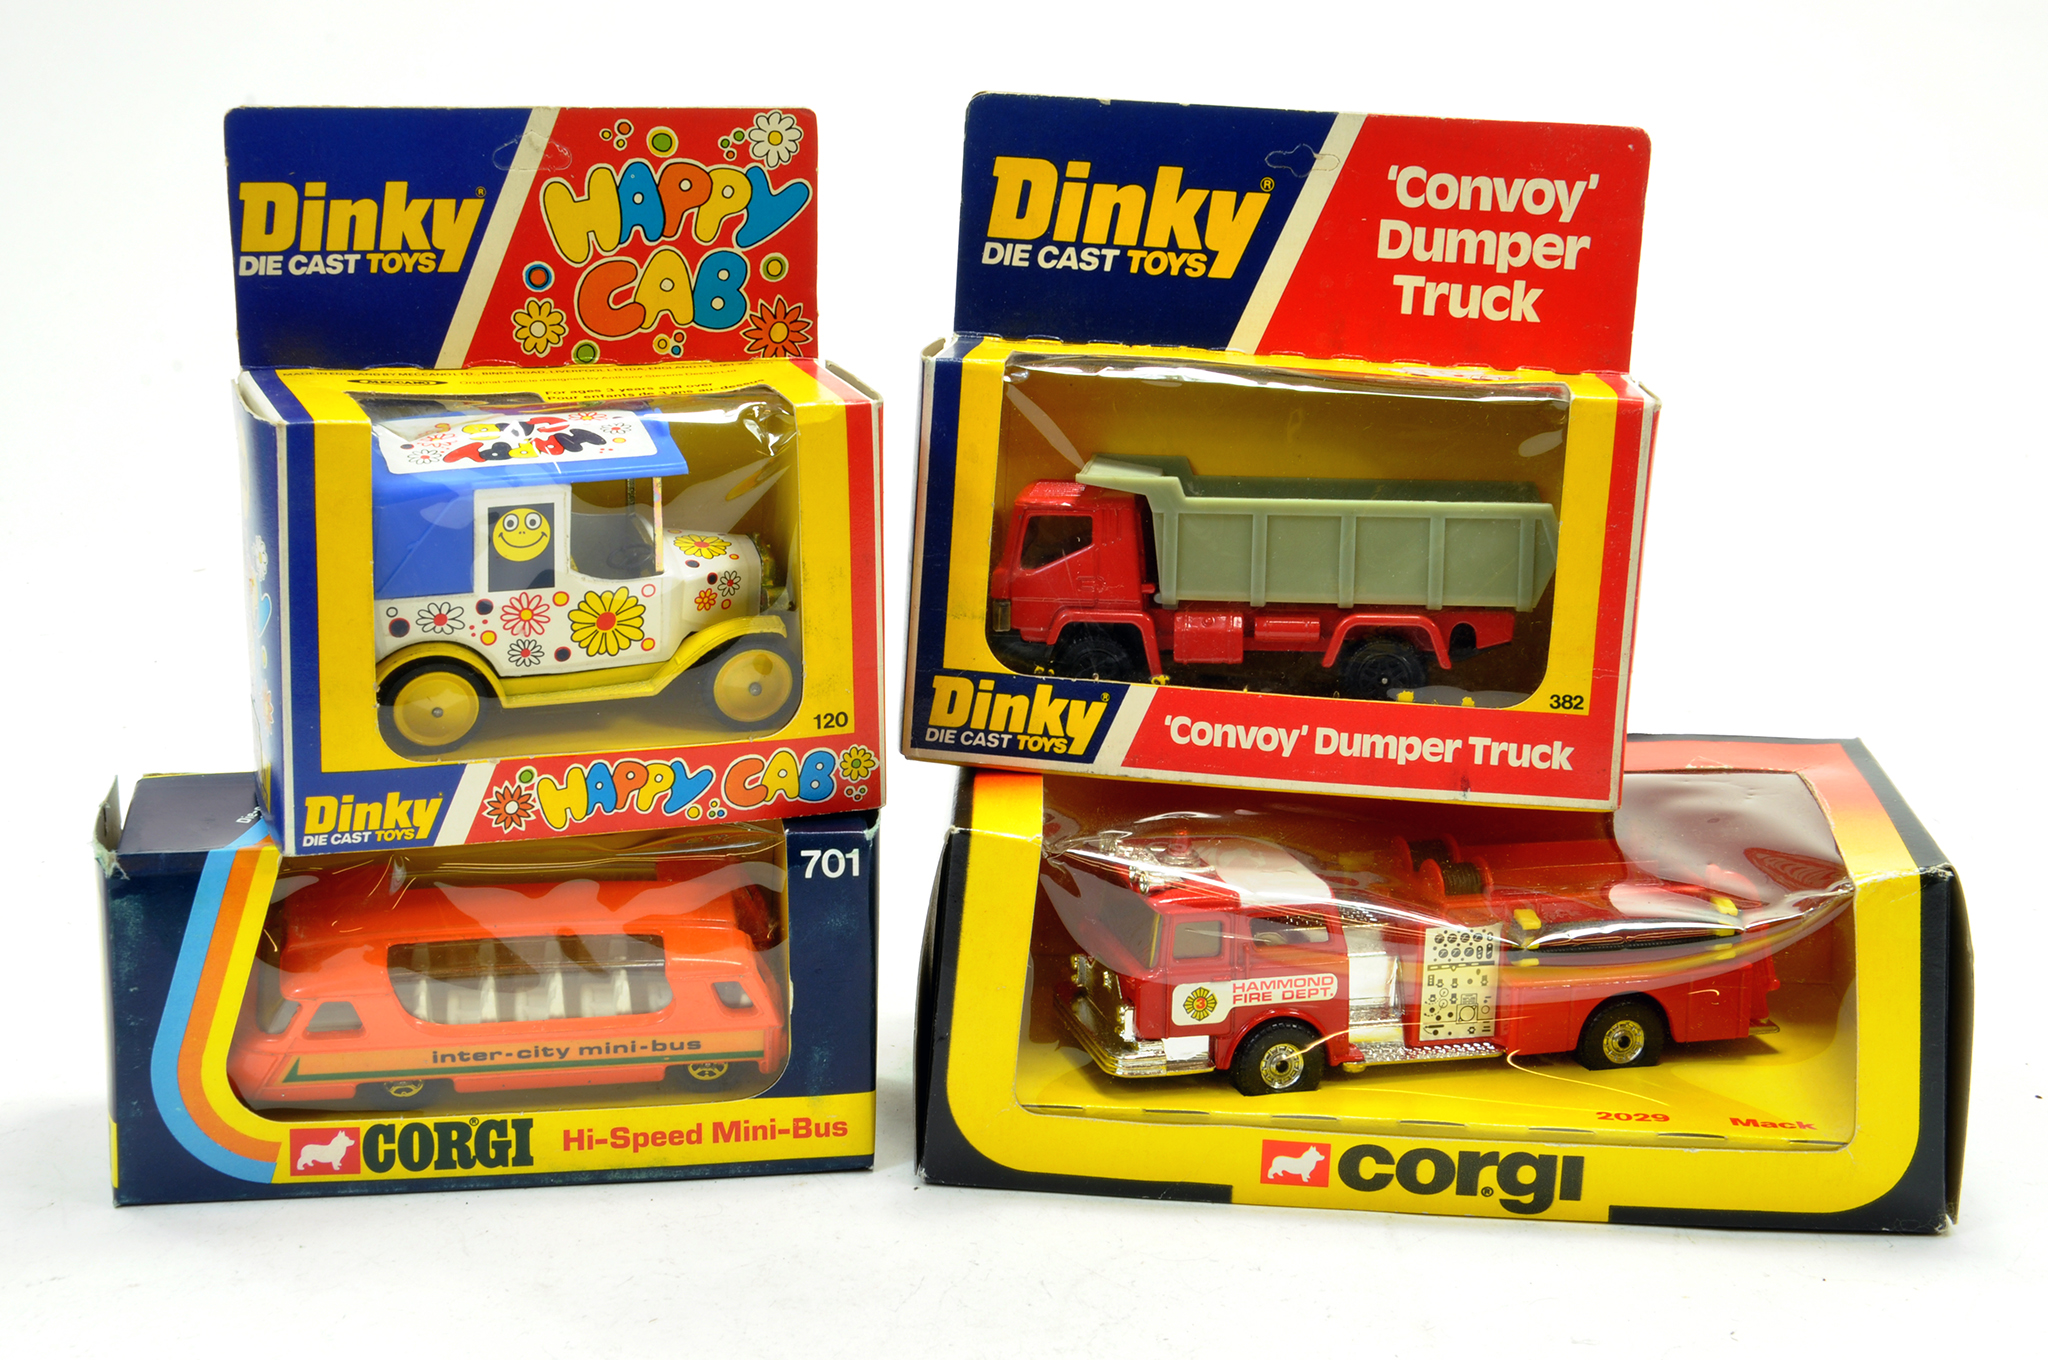 Dinky No. 120 Happy Cab, No. 382 Convoy Truck plus Corgi No. 2029 Fire Truck and No. 701 Hi-Speed